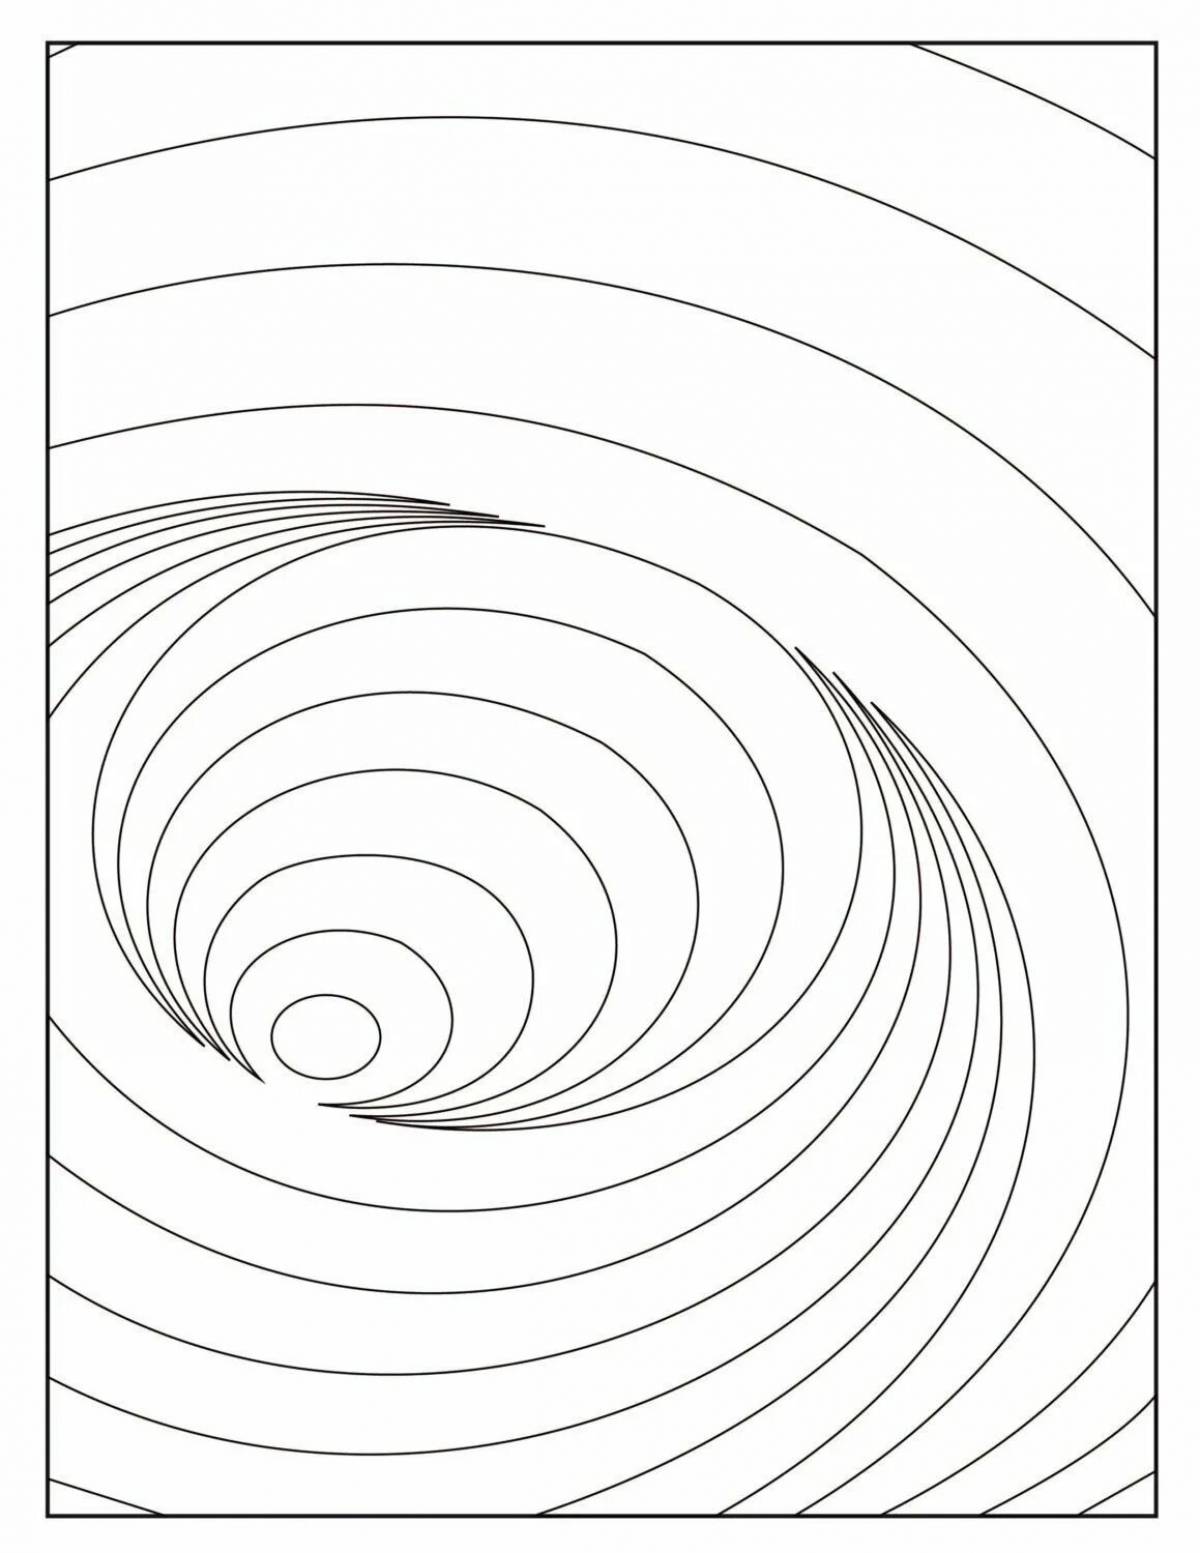 Program #1 spiral according to its photo